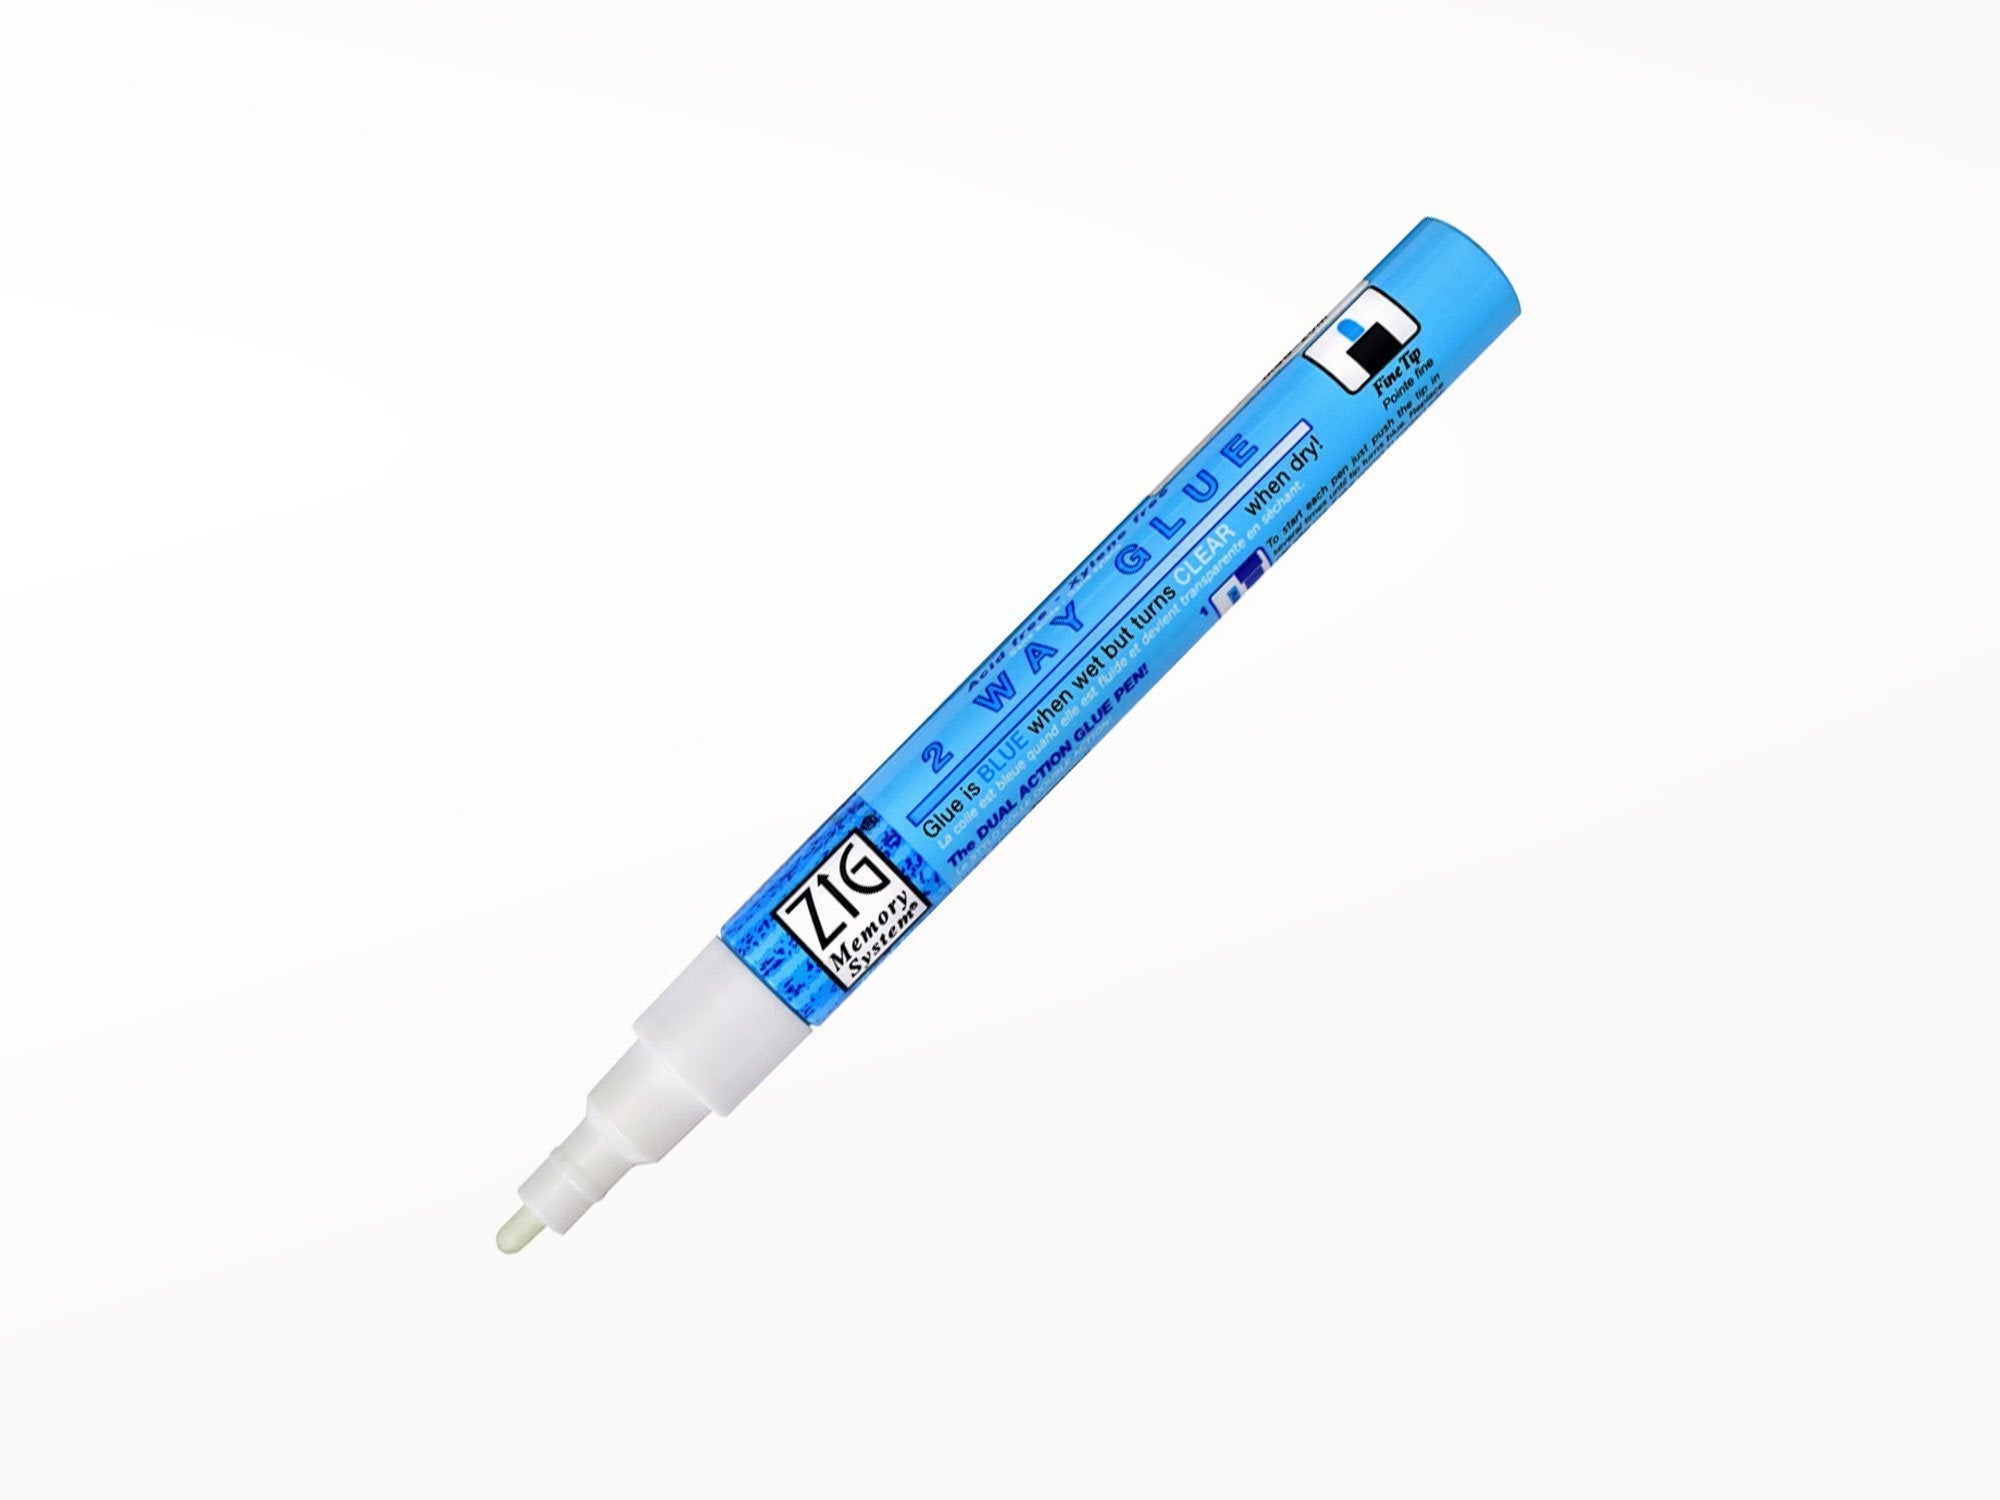 Kuretake ZIG Memory System 2-Way Fine Tip Glue Pen